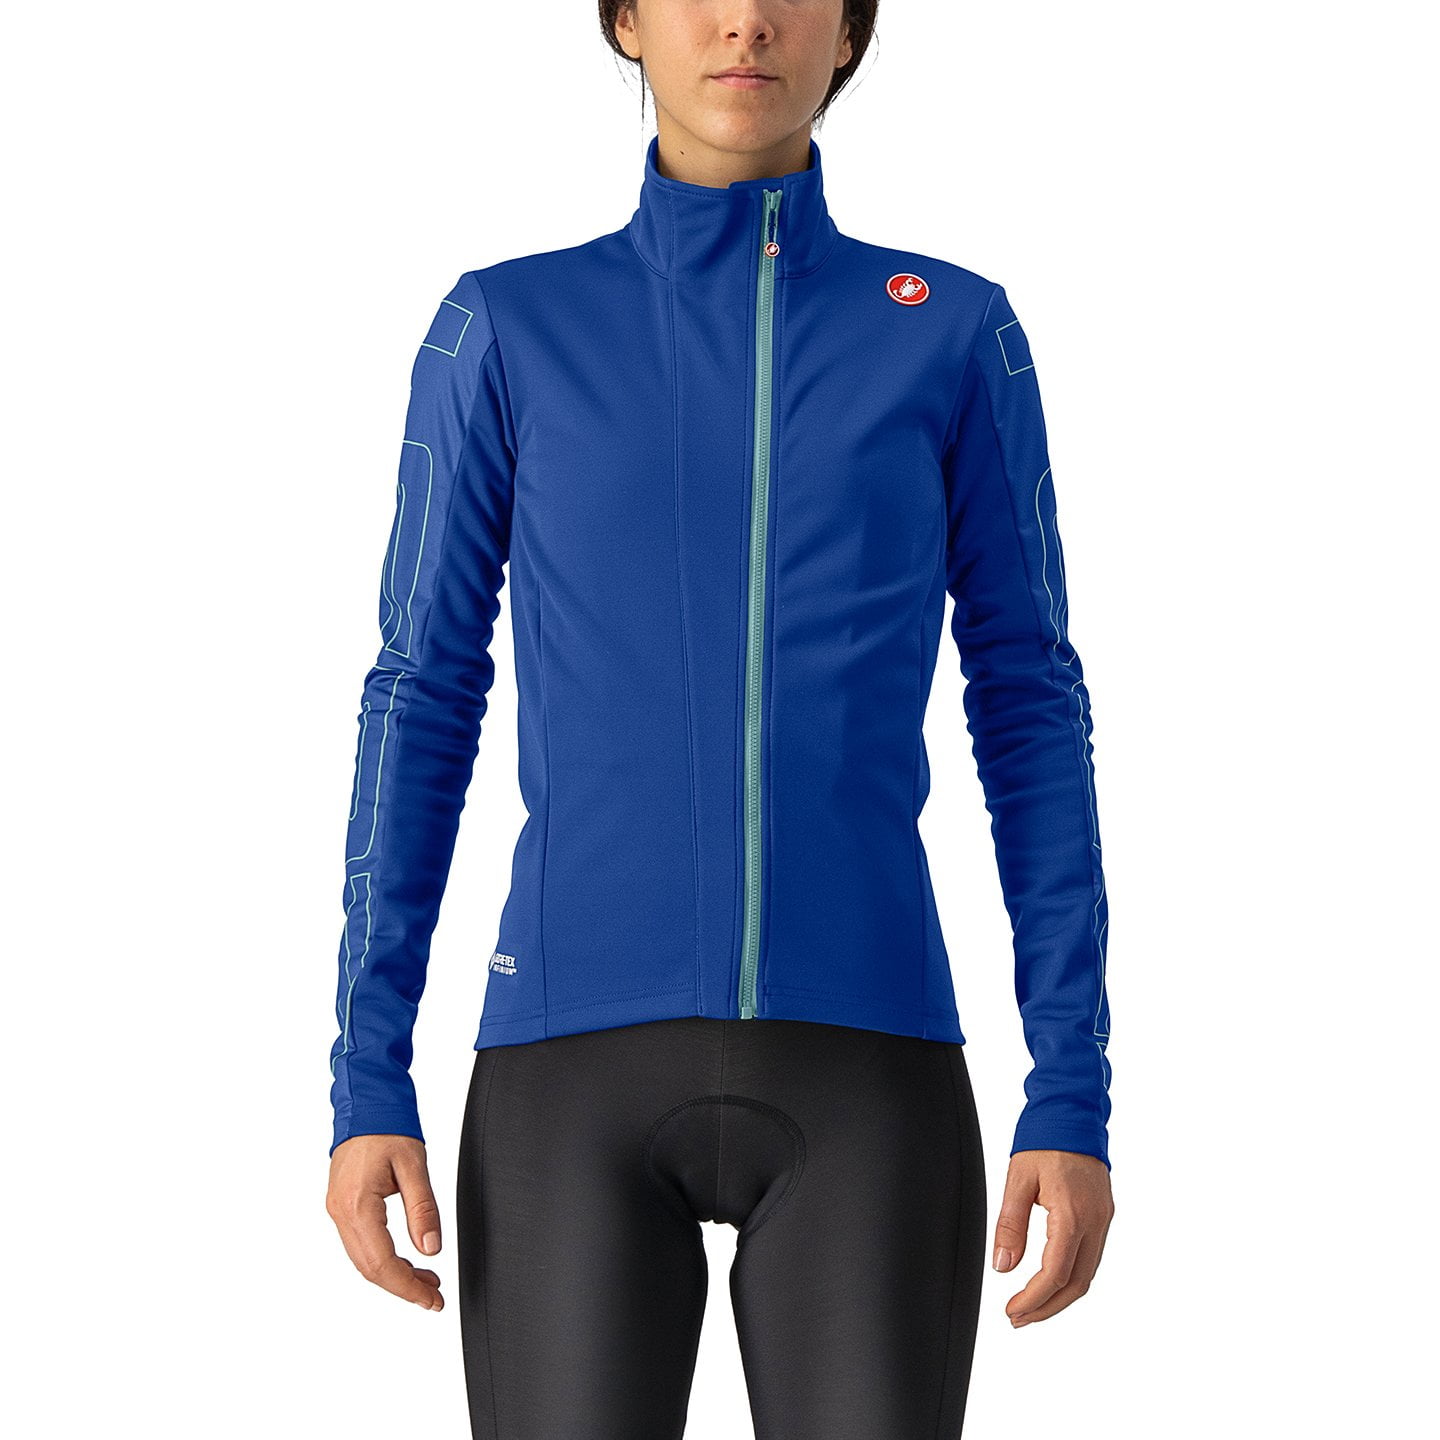 CASTELLI Transition Women’s Winter Jacket Women’s Thermal Jacket, size L, Winter jacket, Cycling clothing